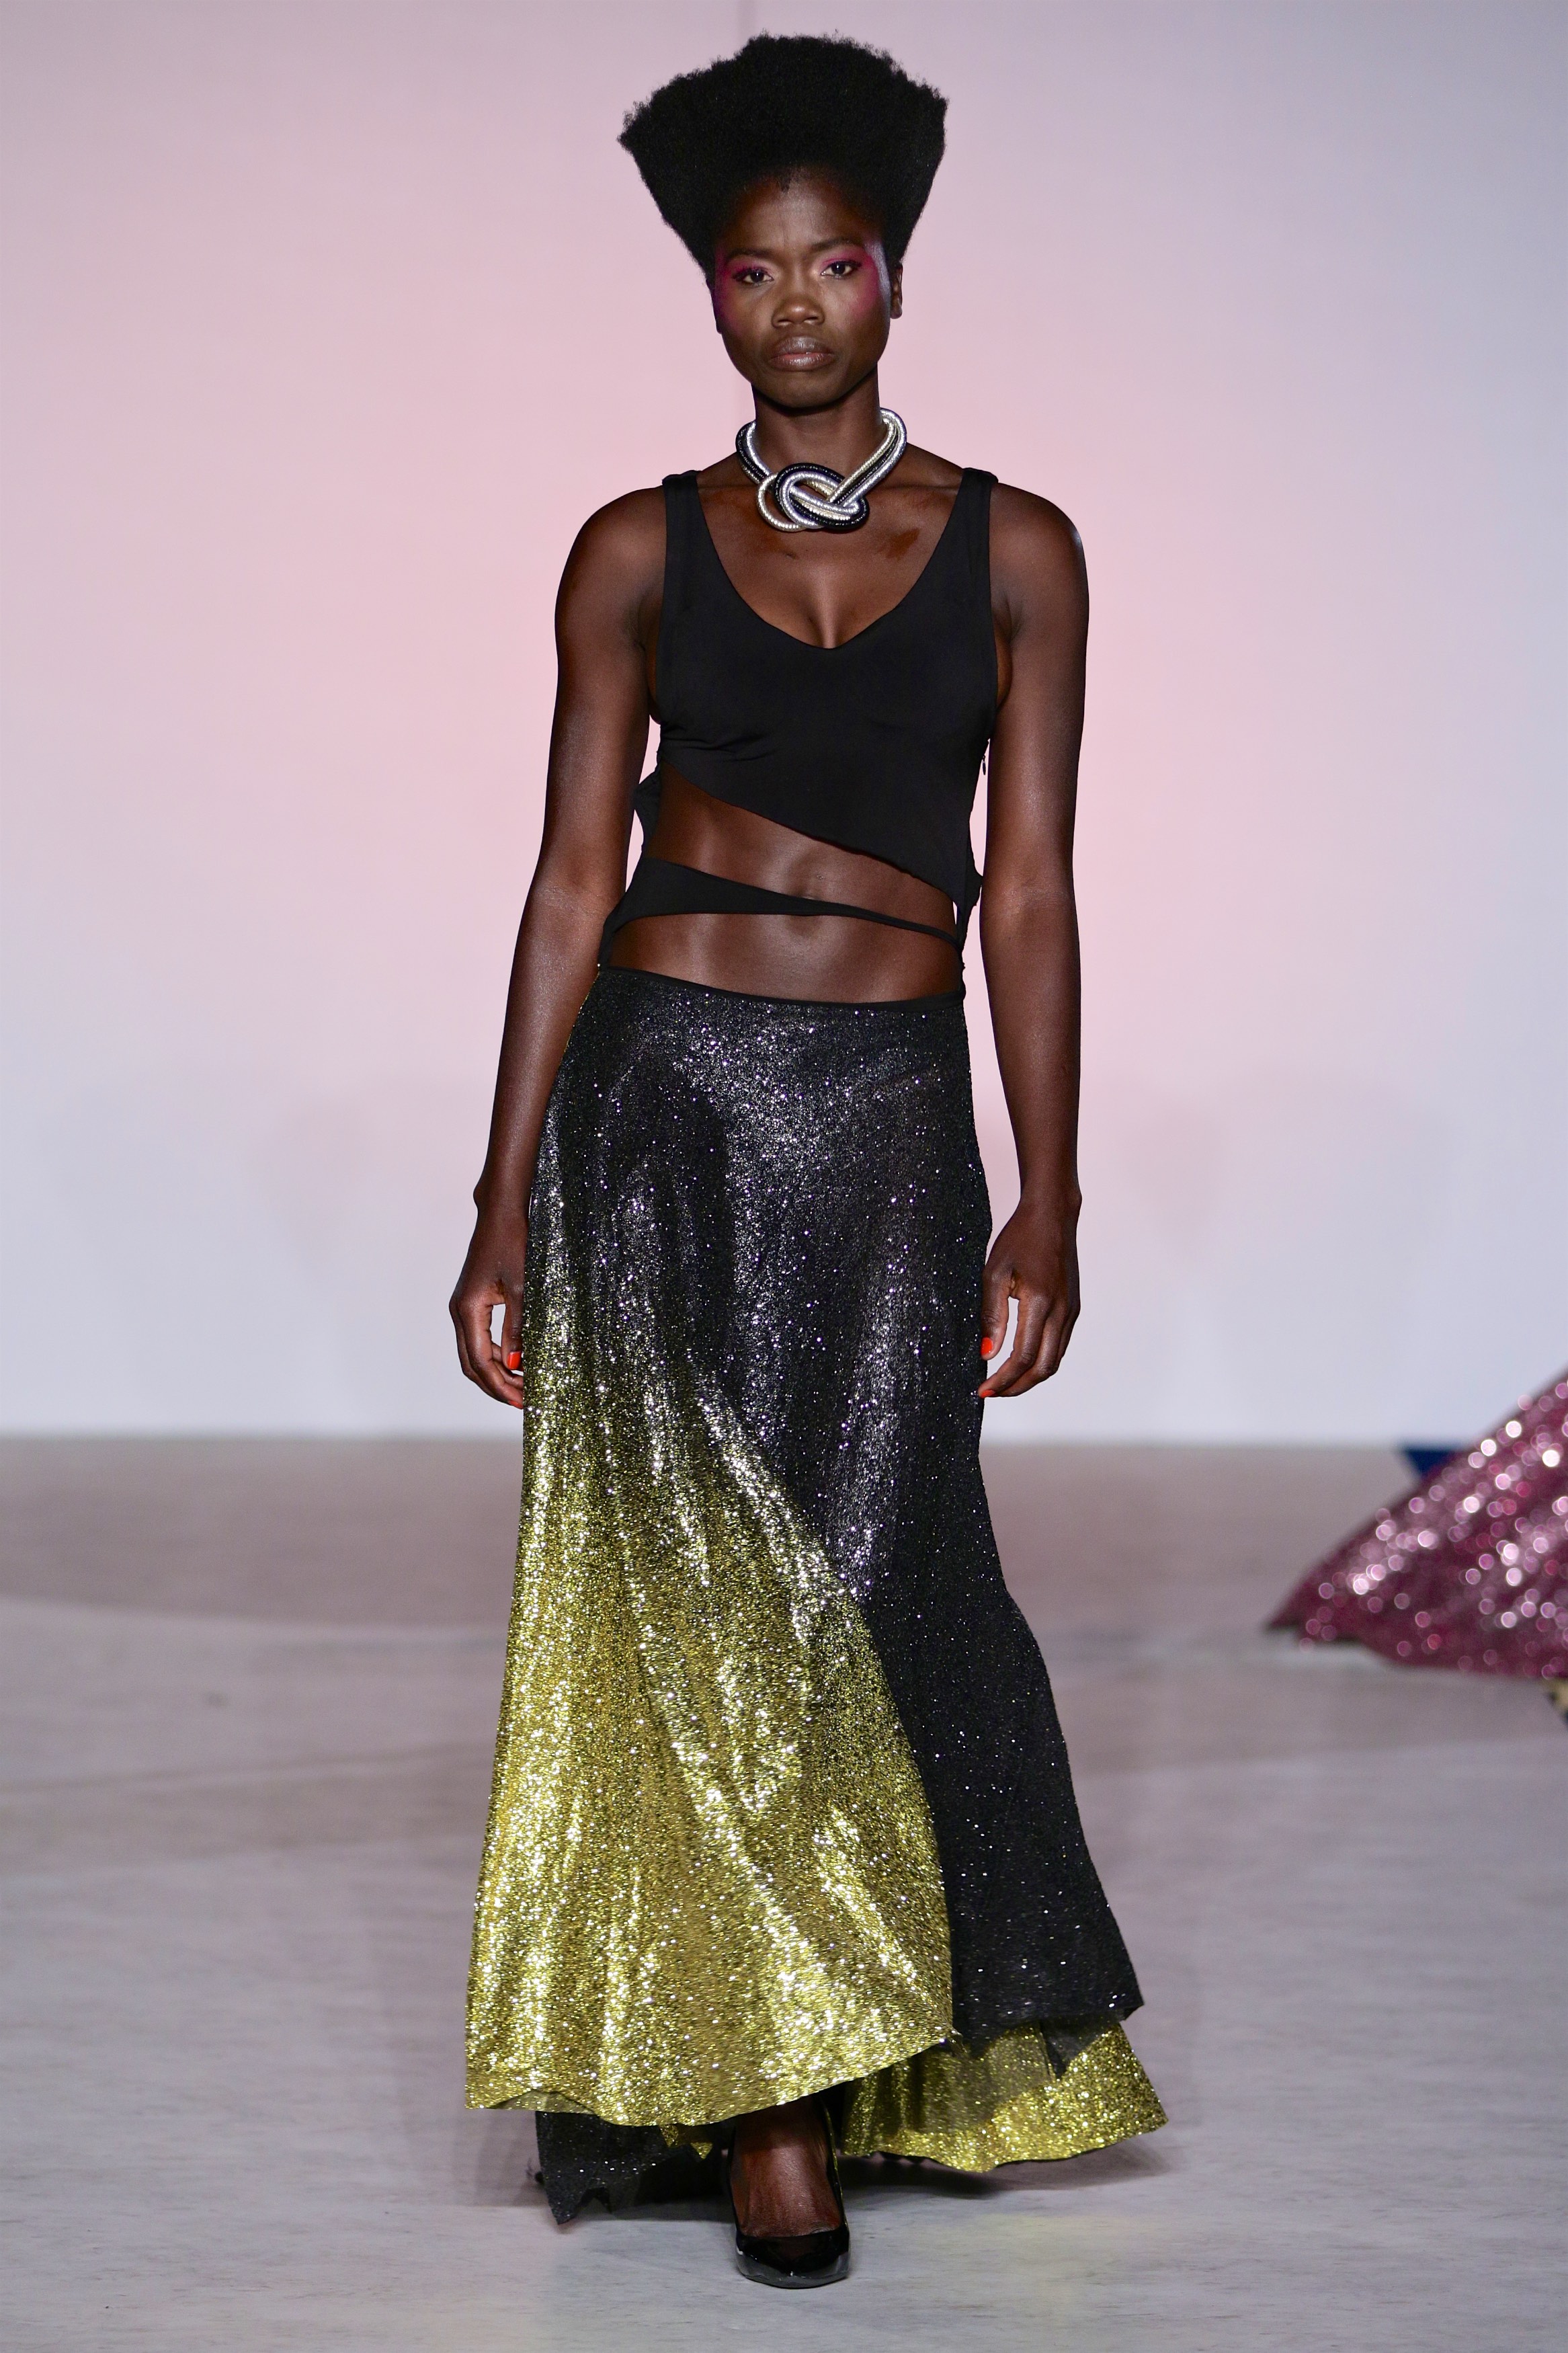 Africa Fashion Week London 2019 | Katiti Seychelles | BN Style